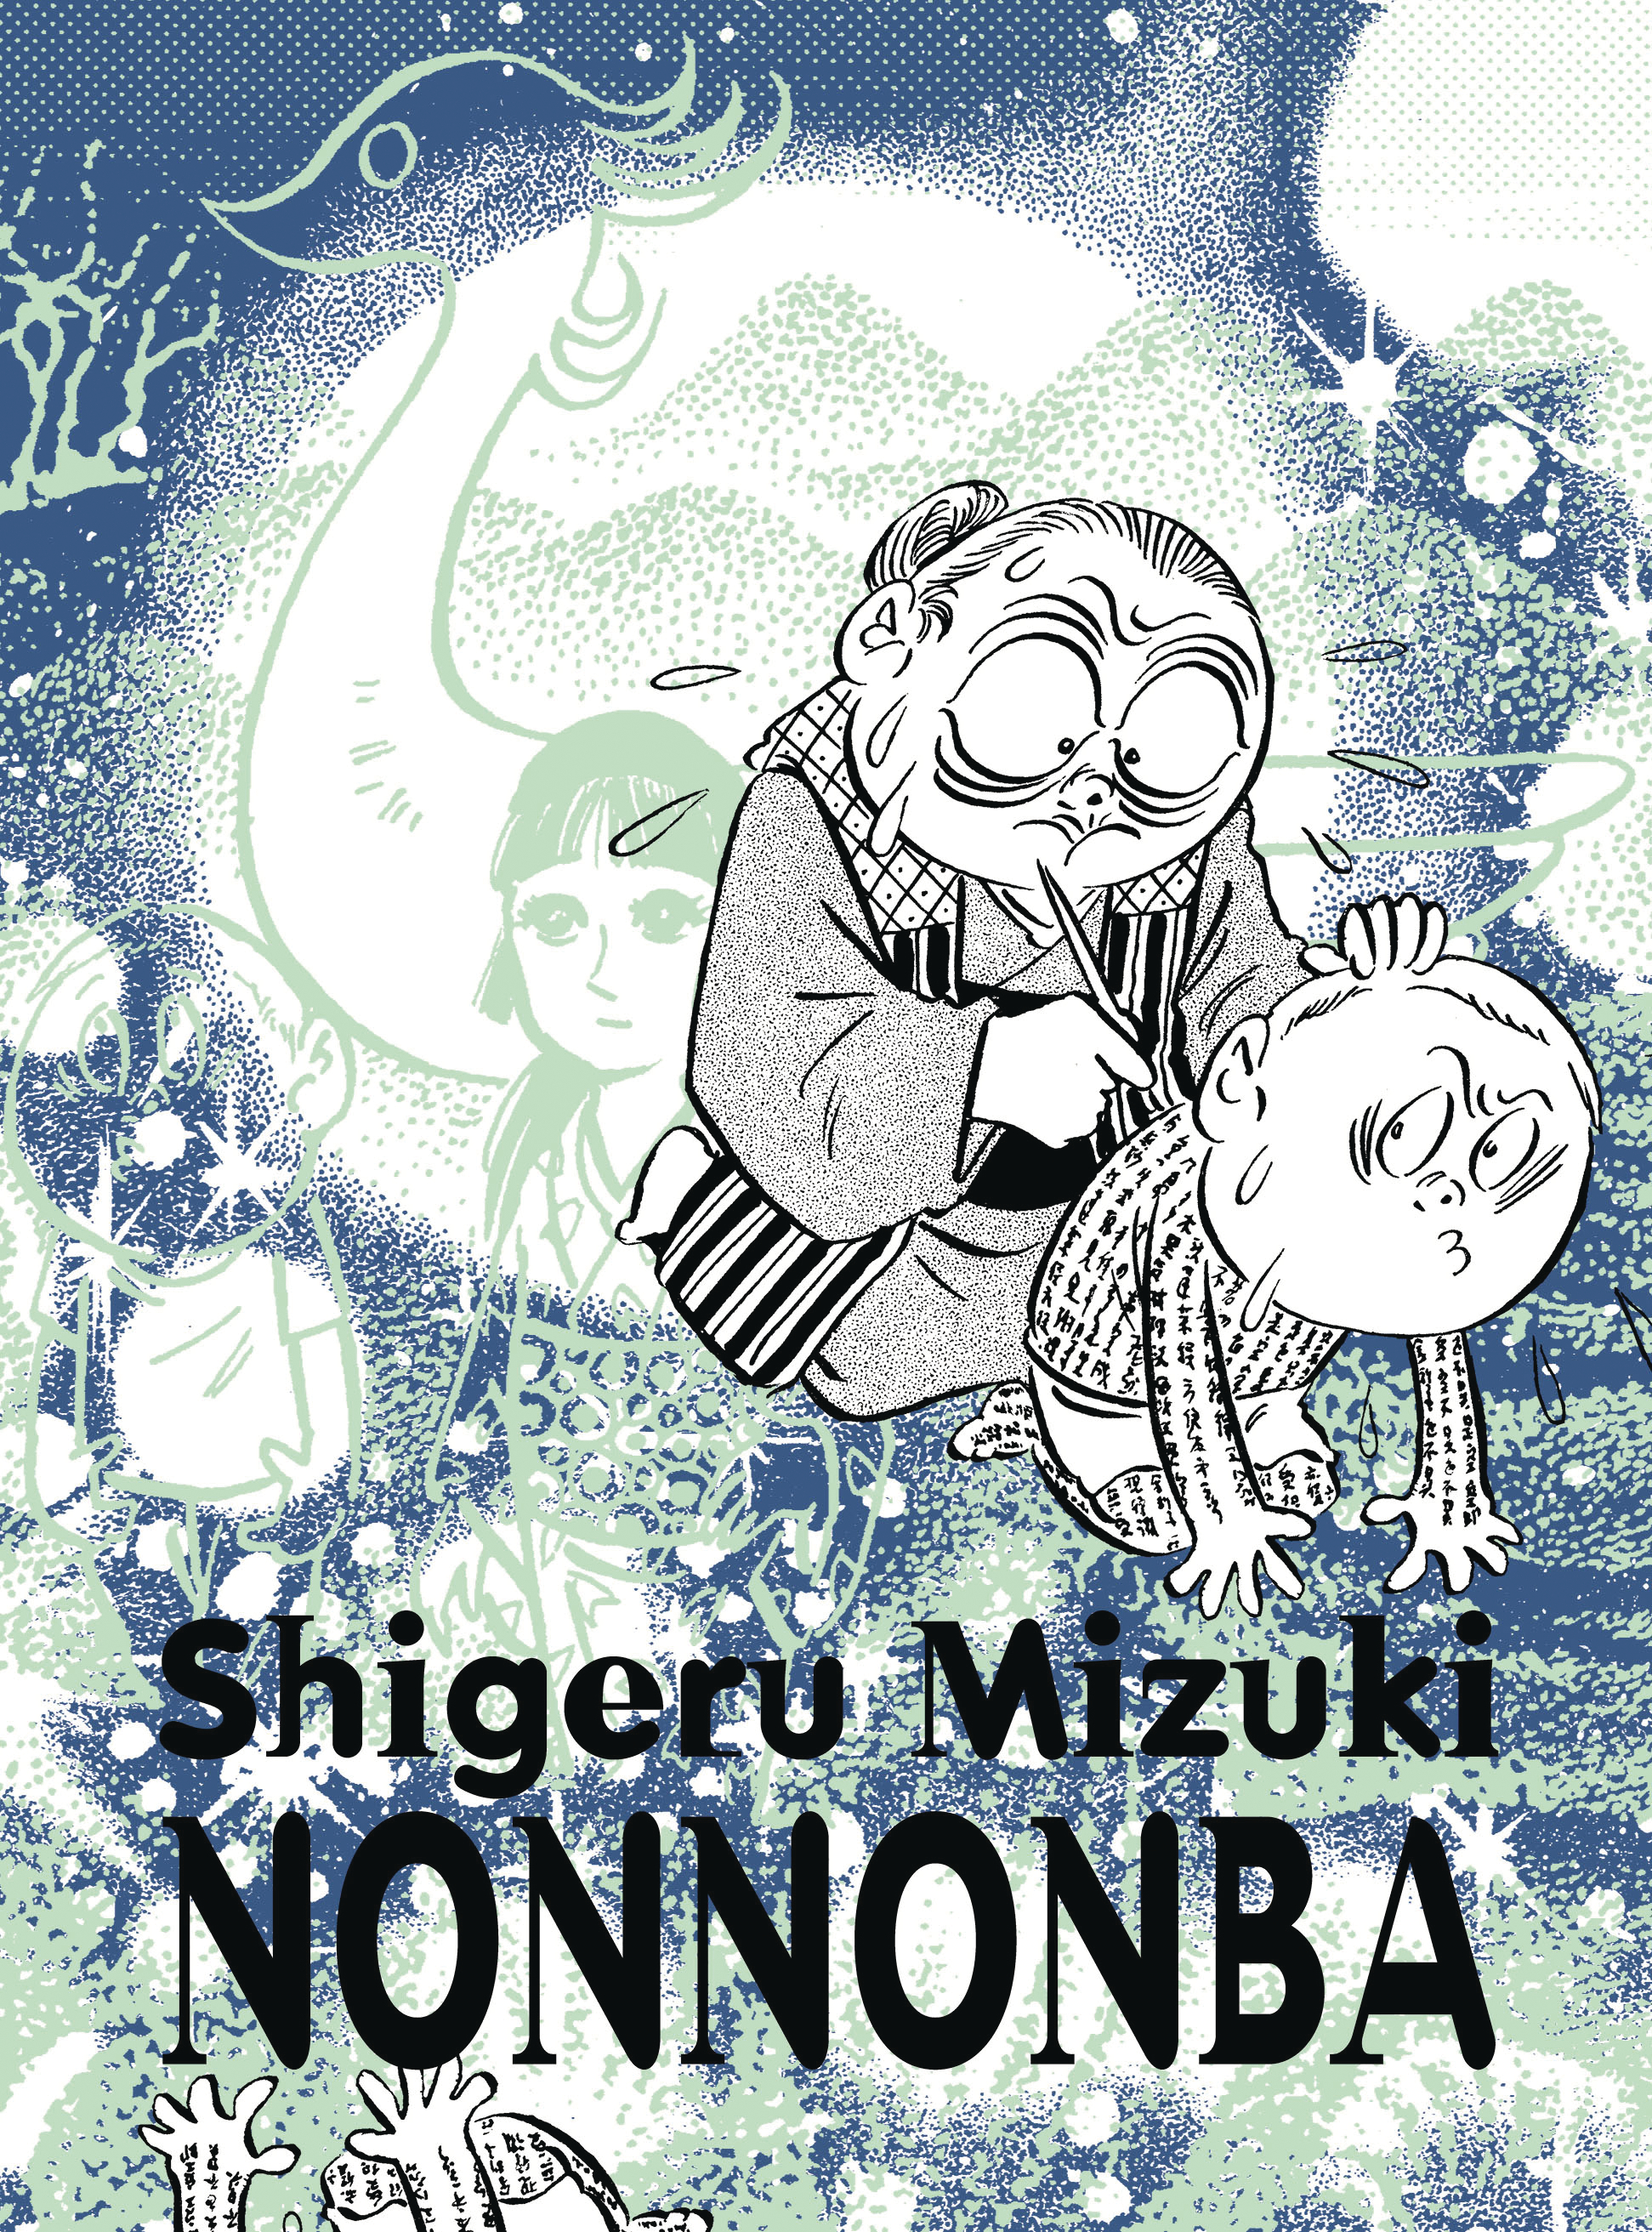 Nonnonba Graphic Novel New Printing (Mature)